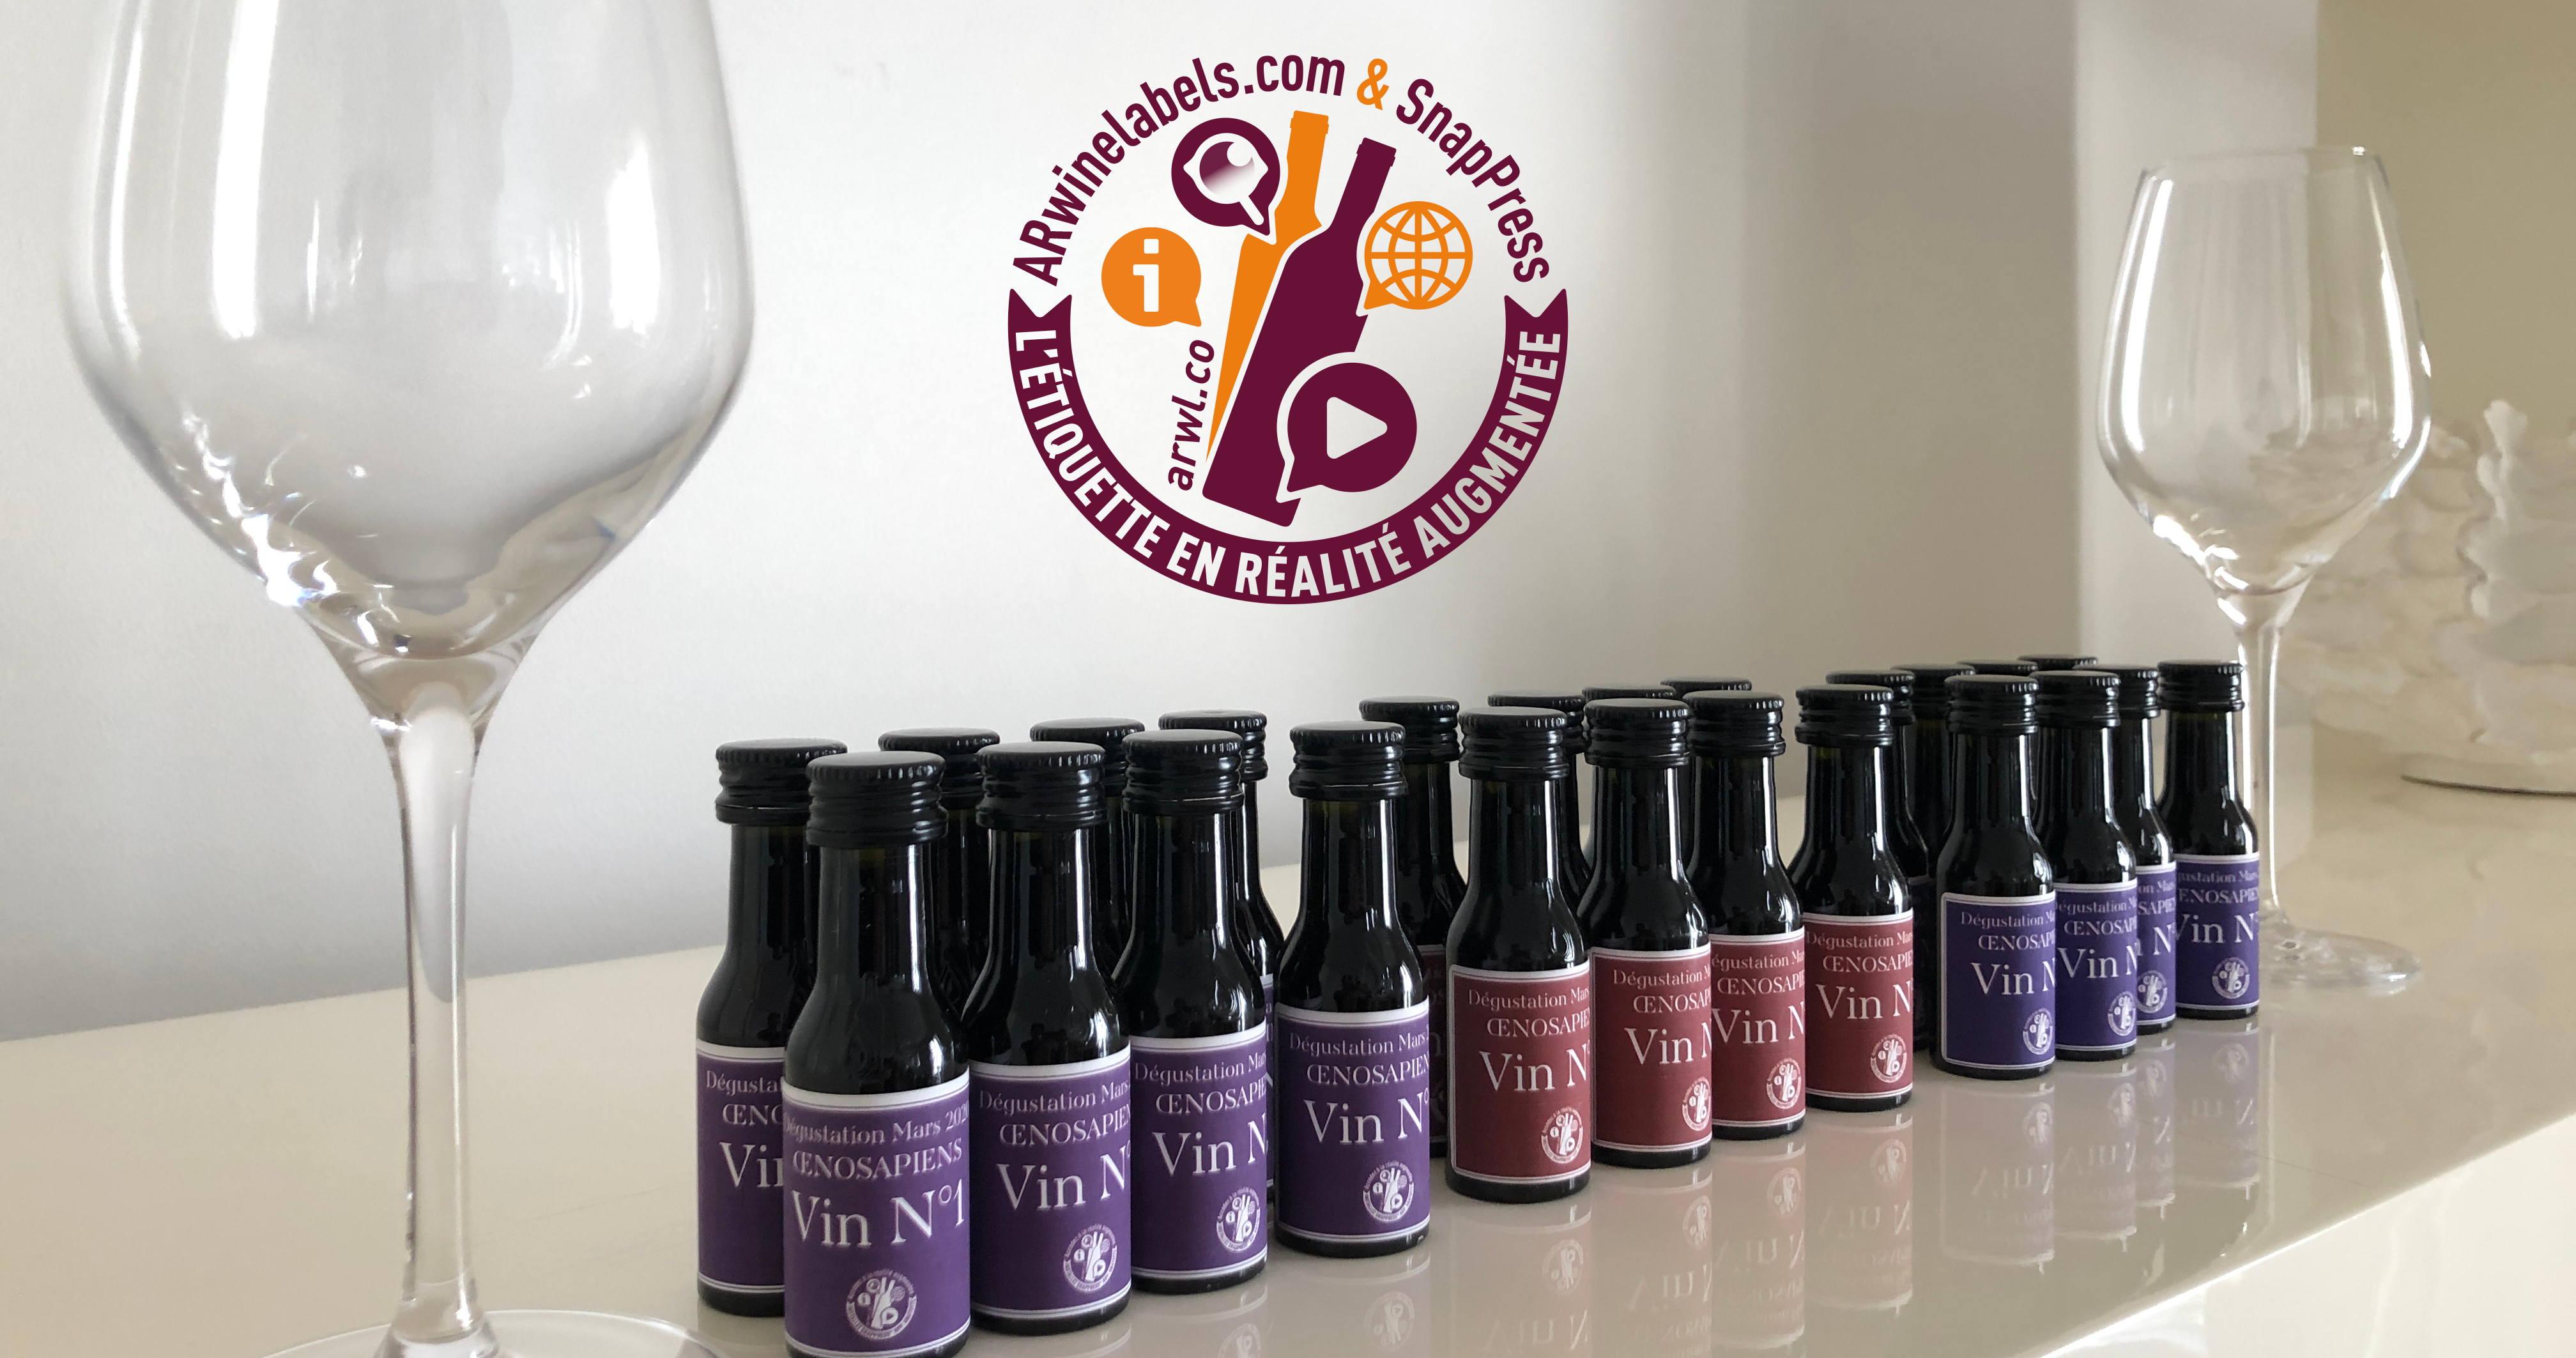 AR Winelabels and Vinottes for blind tasting